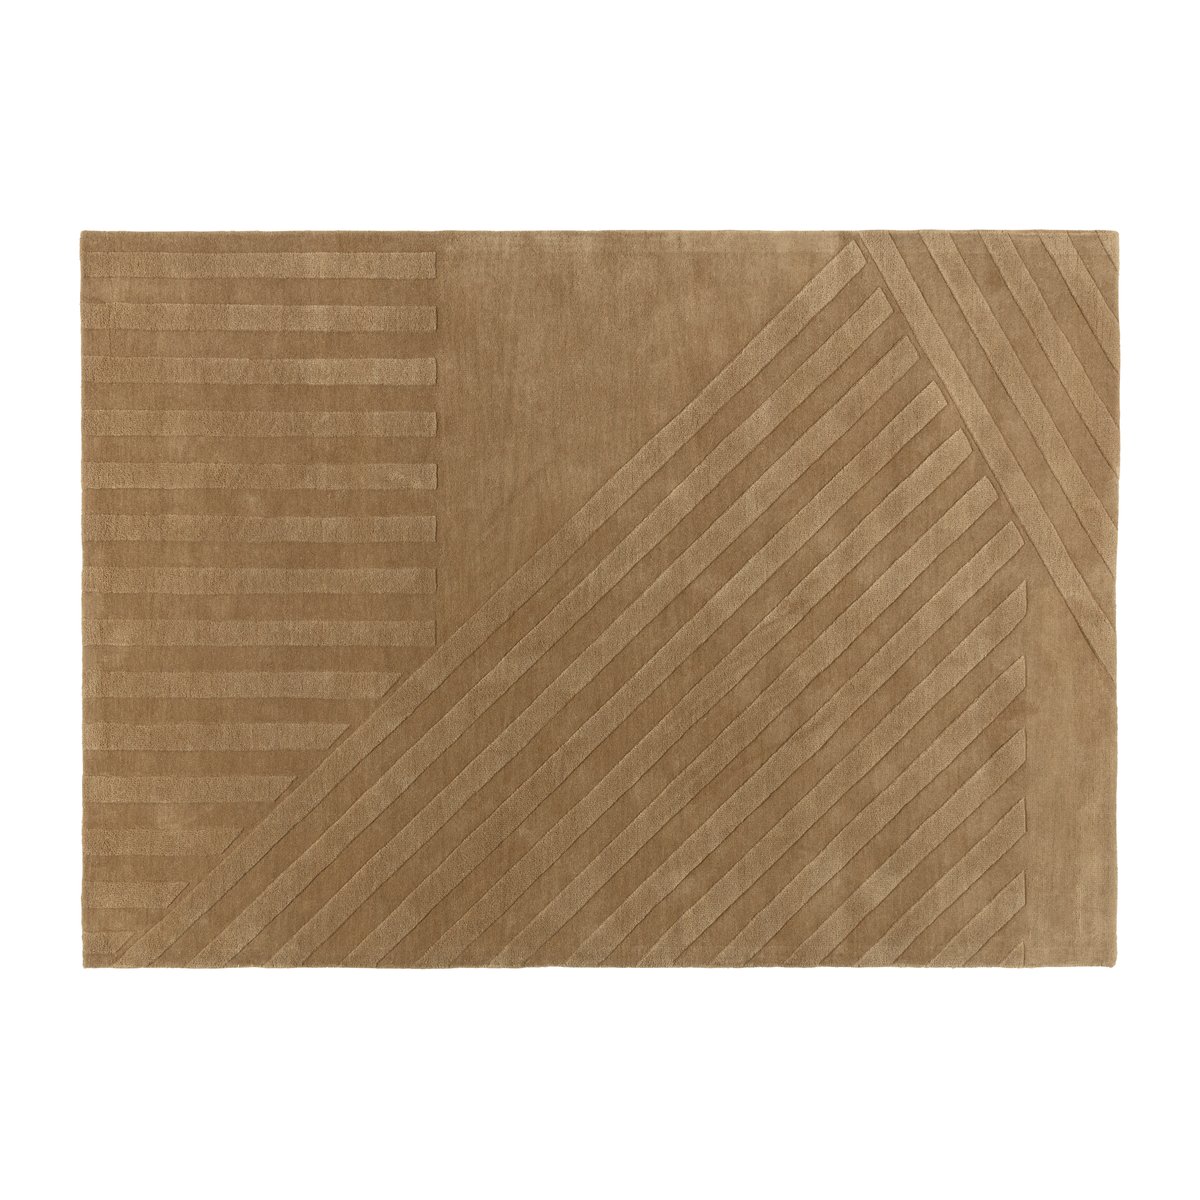 NJRD Levels uldtæppe stripes beige 200×300 cm